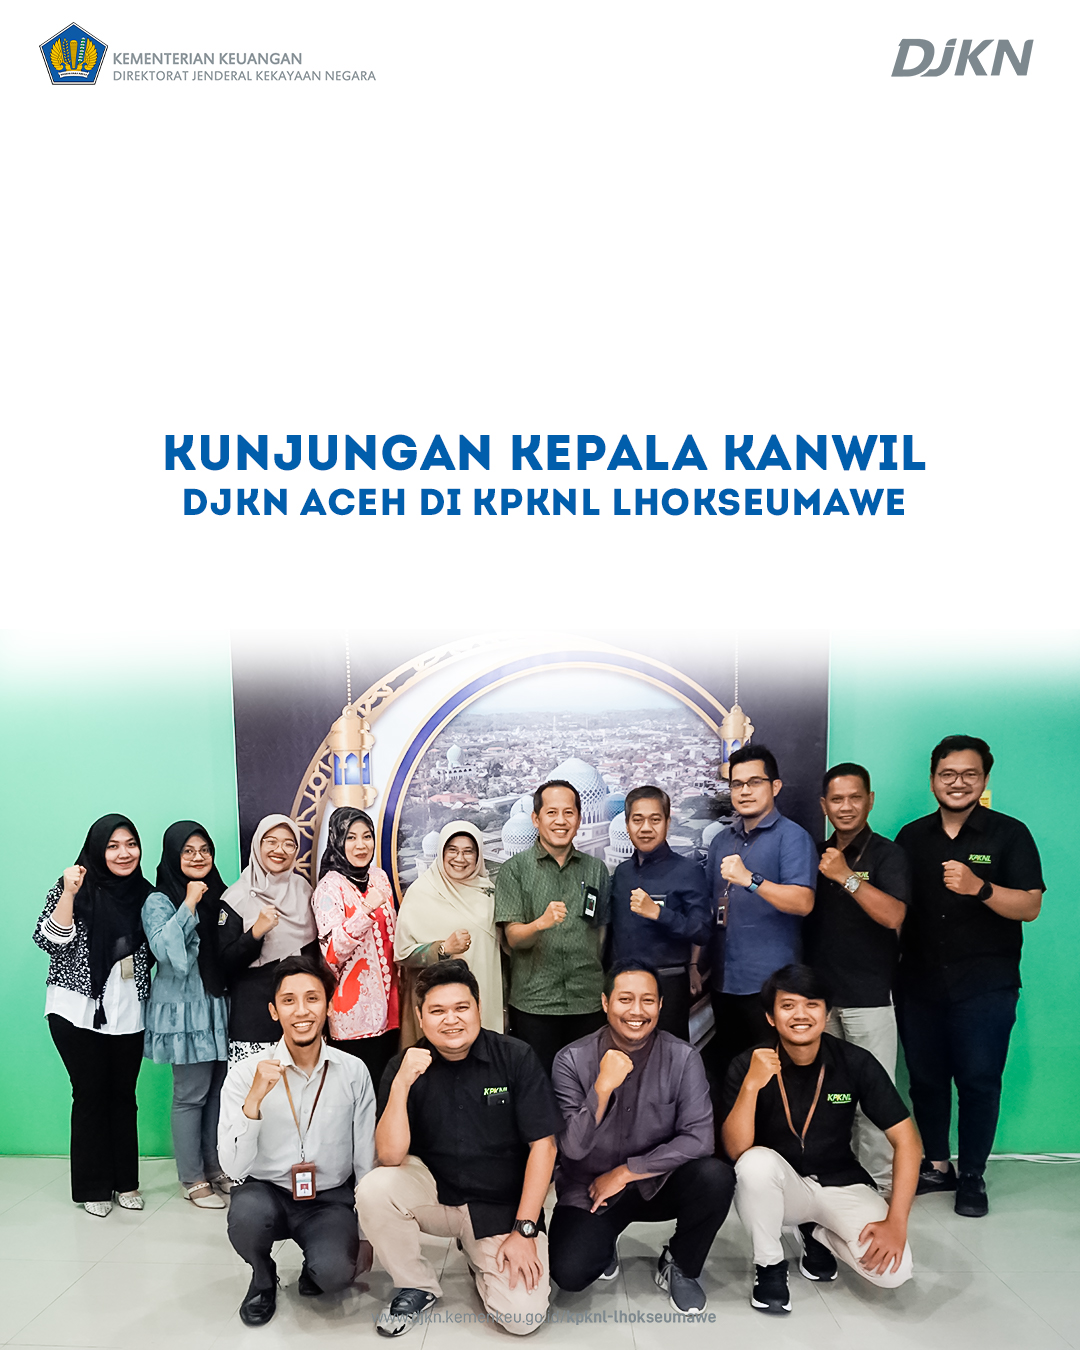 Kunjungan Kepala Kanwil DJKN Aceh: Sharing Session Santai, Target Tercapai!